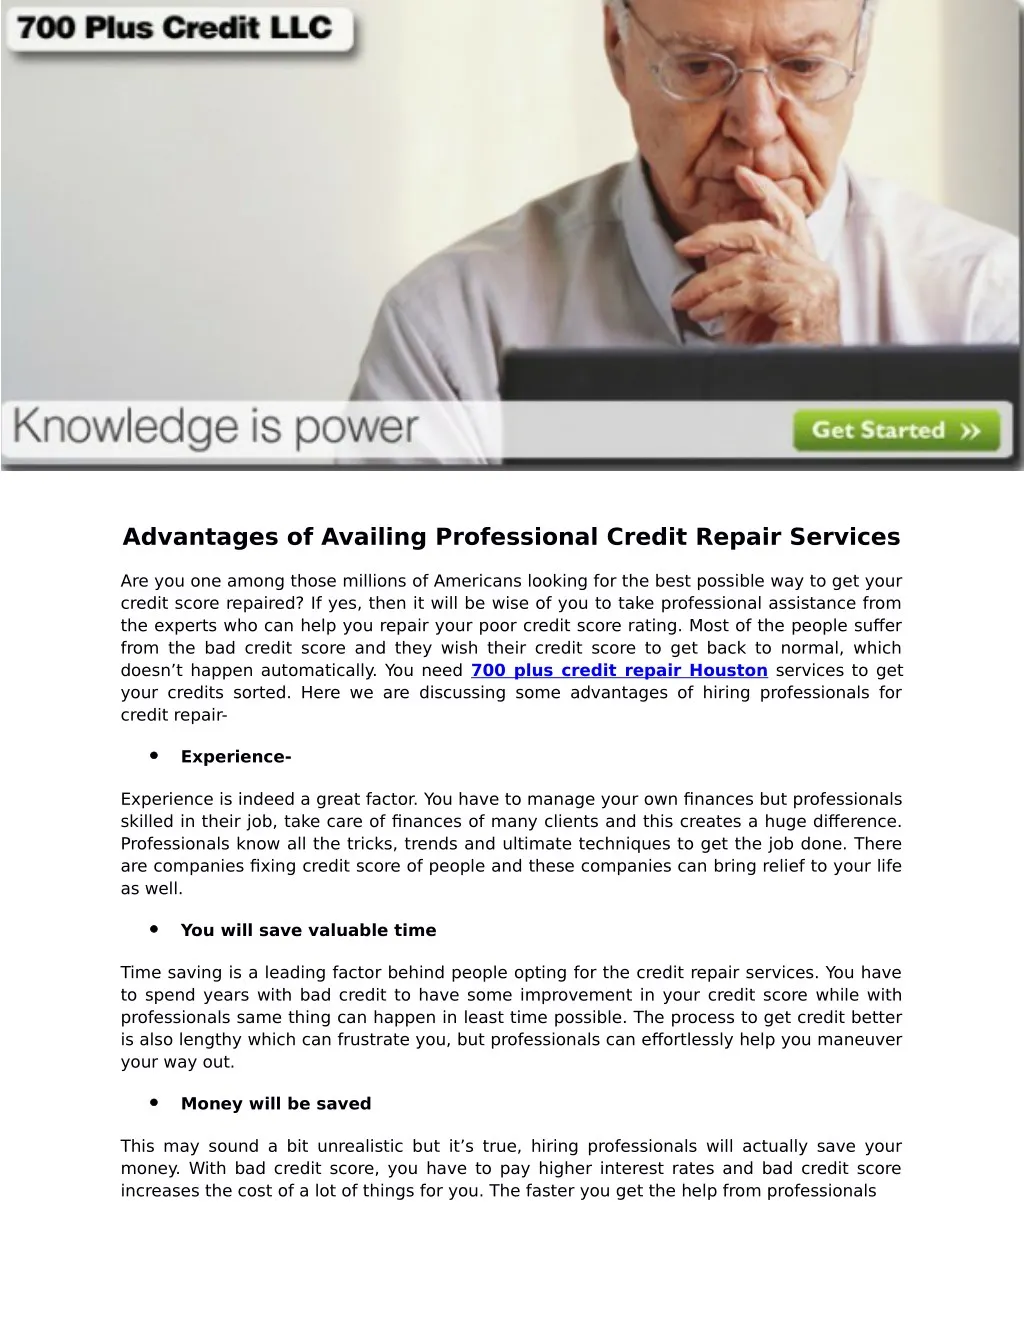 advantages of availing professional credit repair